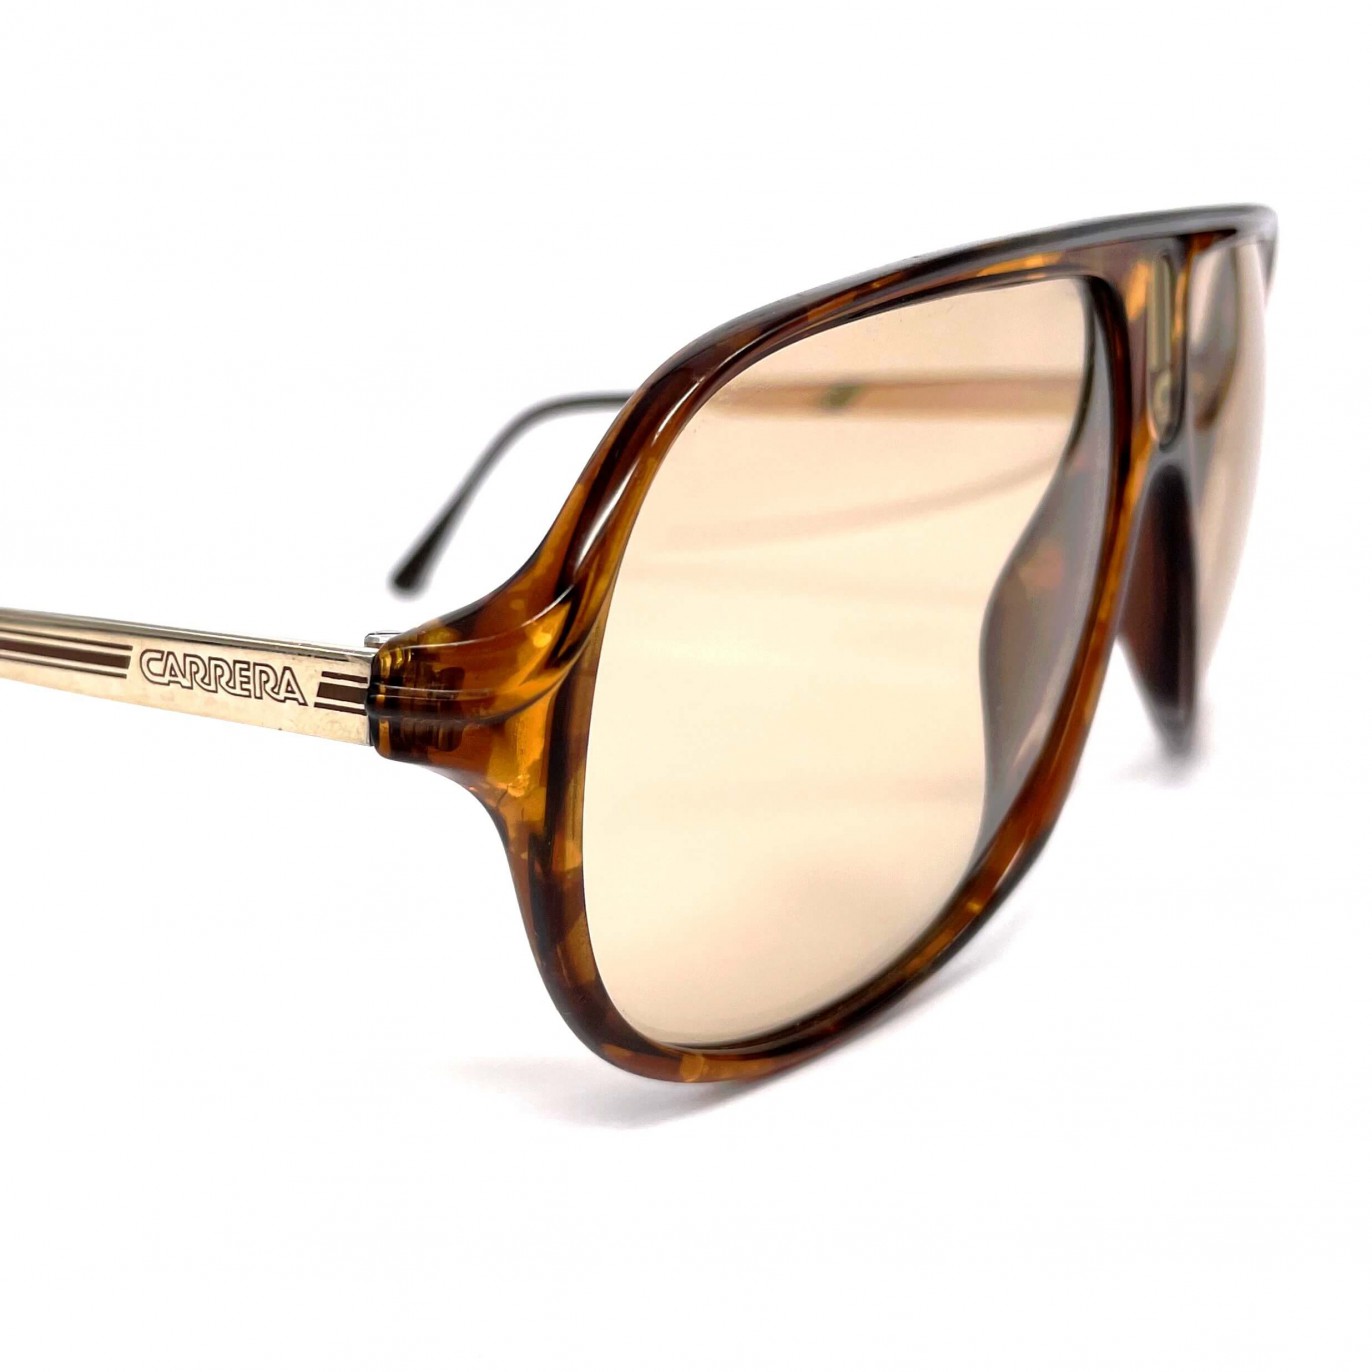 Carrera 5547 - Vintage sunglasses for sale